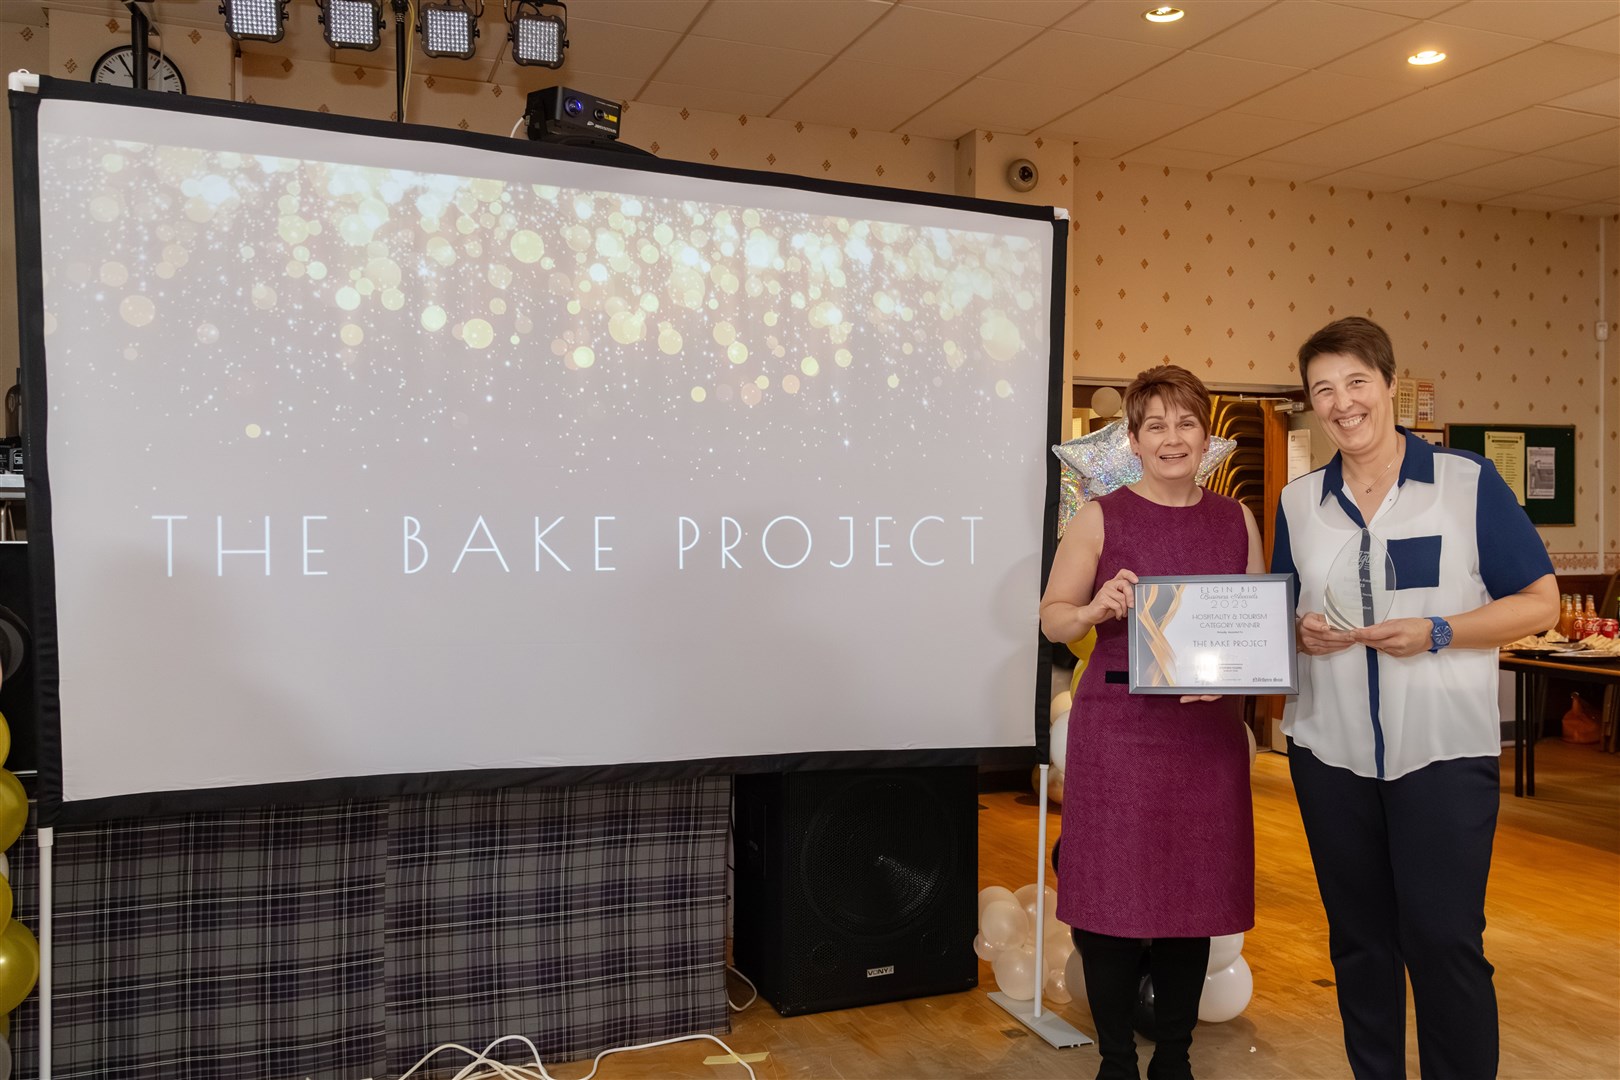 Hazel Robinson (right) of the Bake Project receives her hospitality award from Elgin BID's director Katherine Mackintosh.